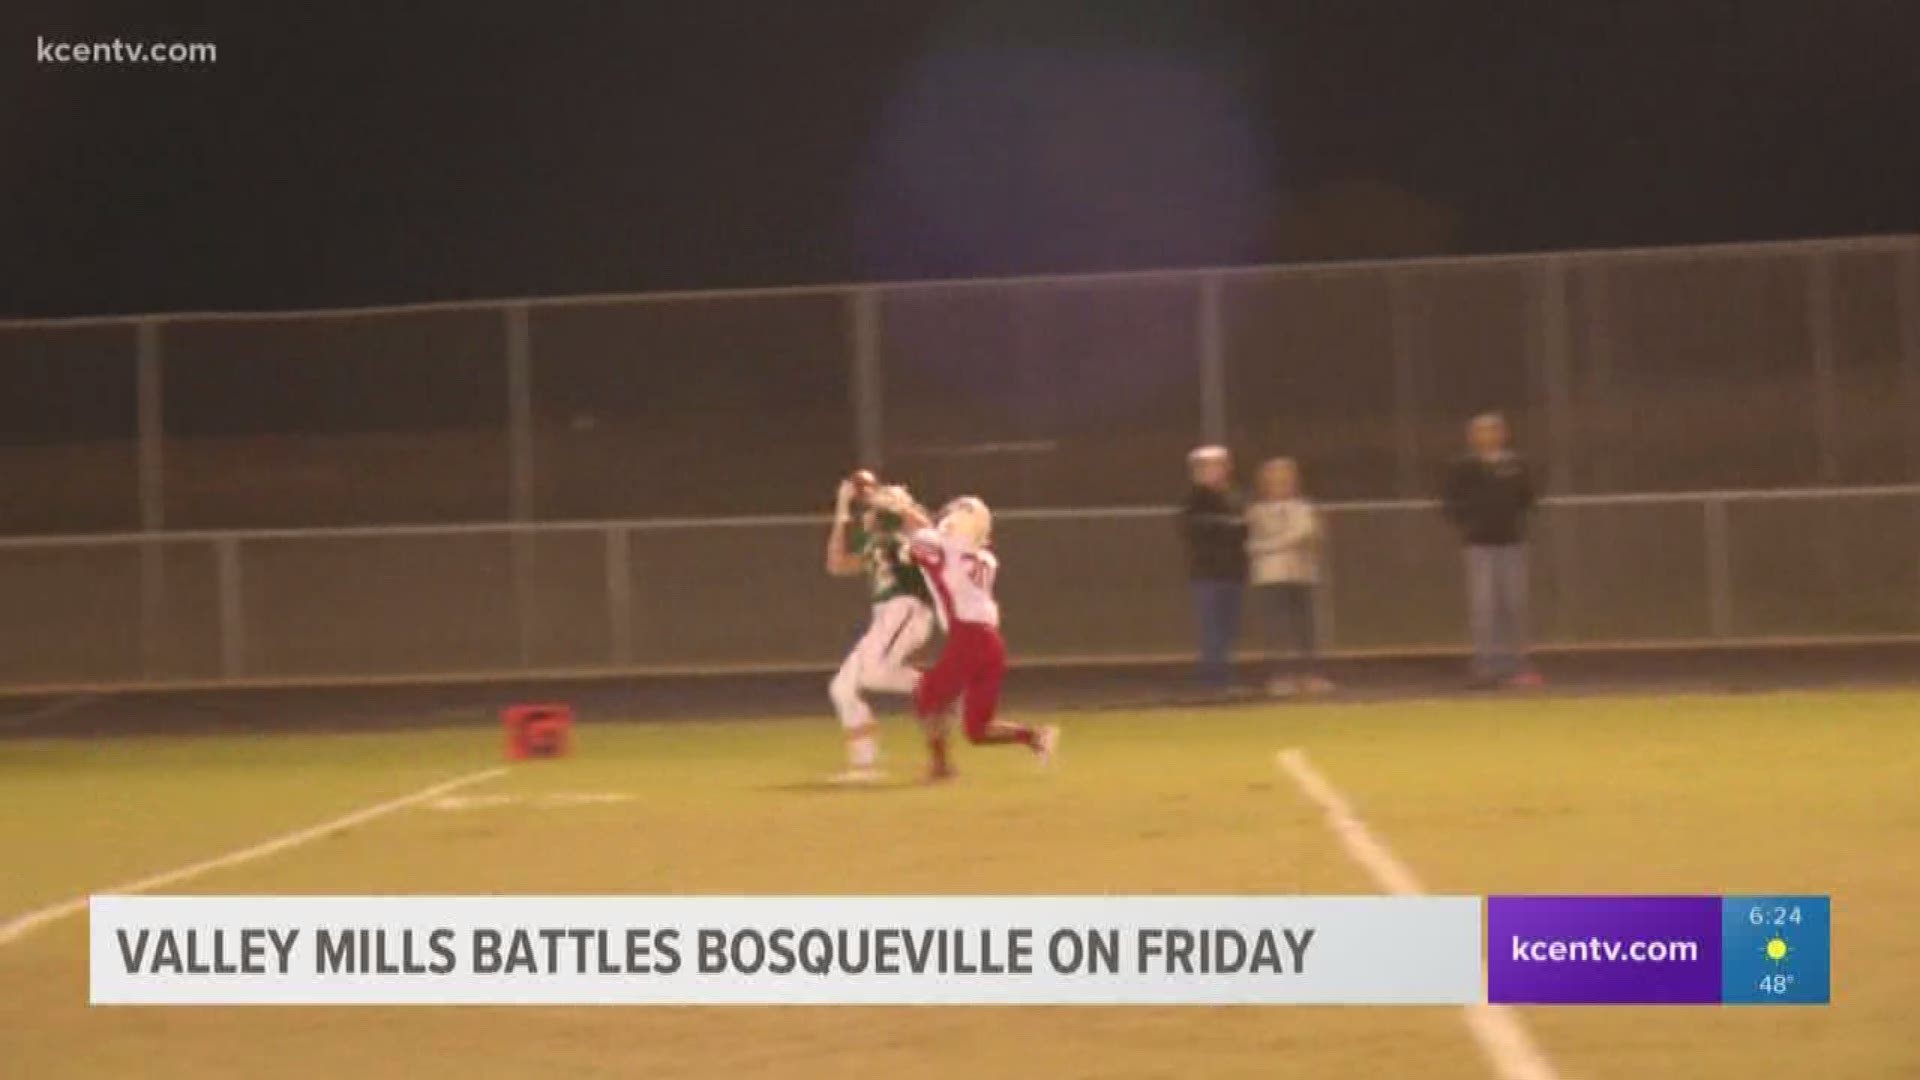 Valley Mills battles Bosqueville on Friday